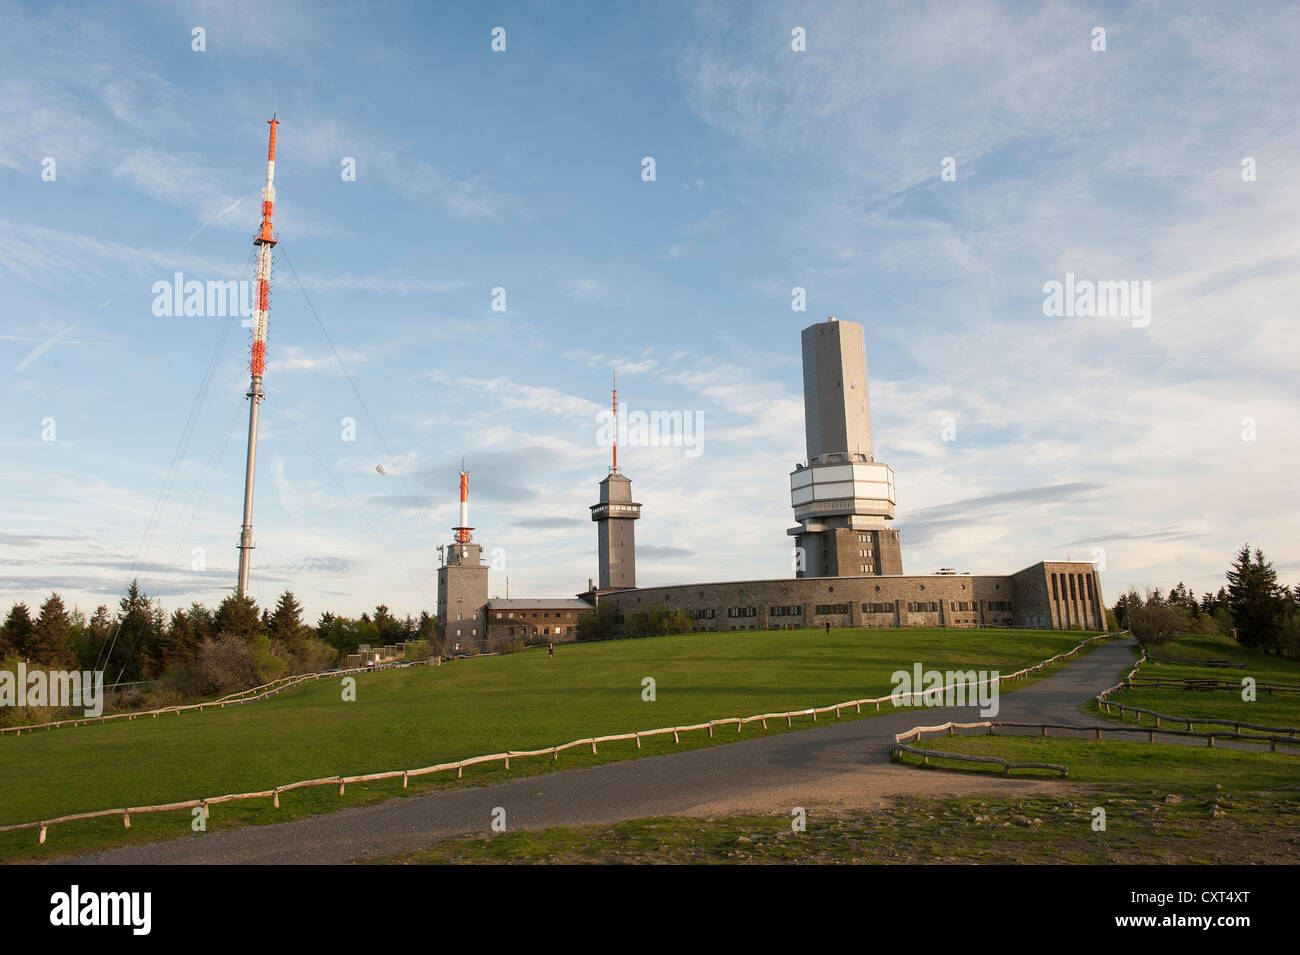 Torre di trasmissione di radiodiffusione di Hesse, 116.17 metri, sinistra, Mt Grosser Feldberg, Niederreifenberg, Hesse, Germania, Europa Foto Stock